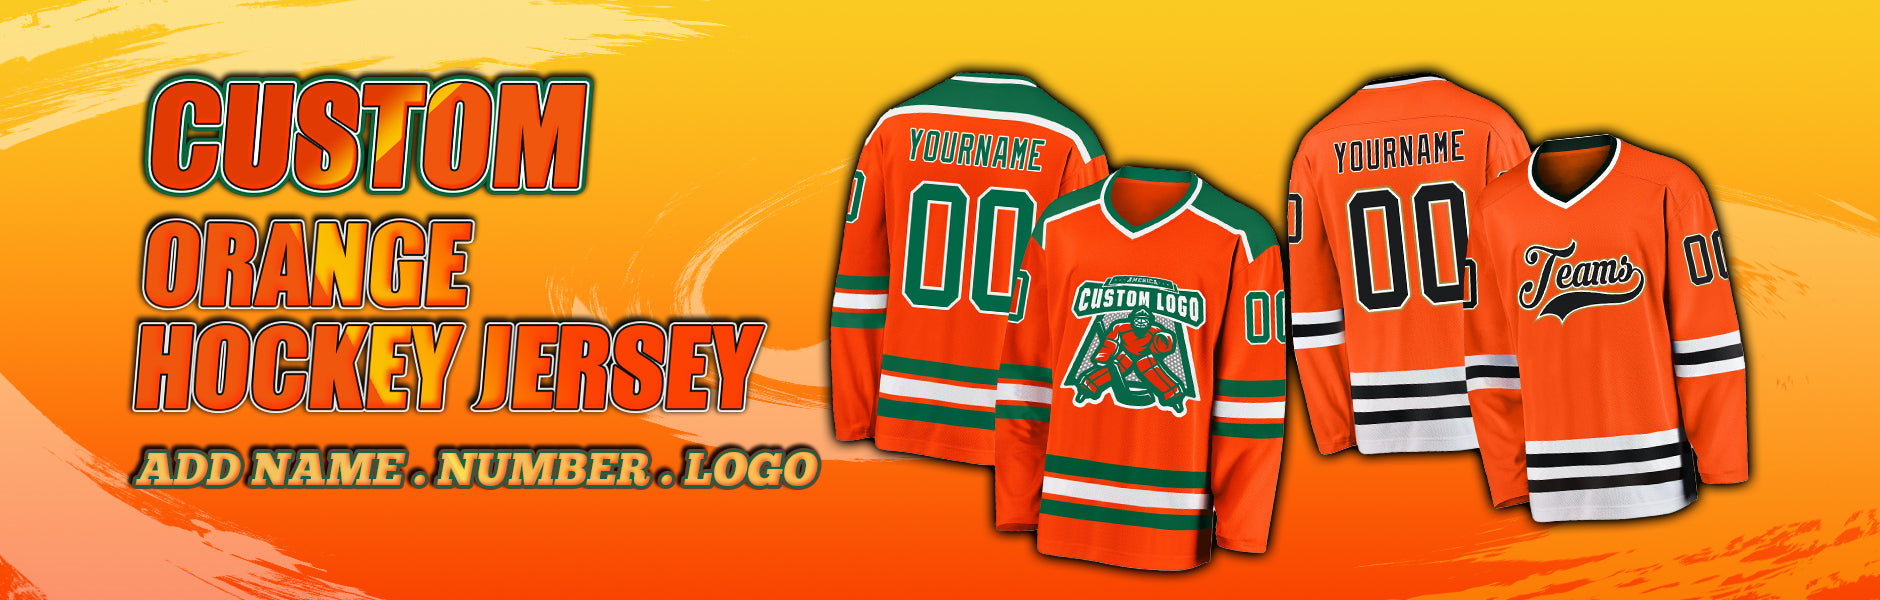 custom hockey orange jersey